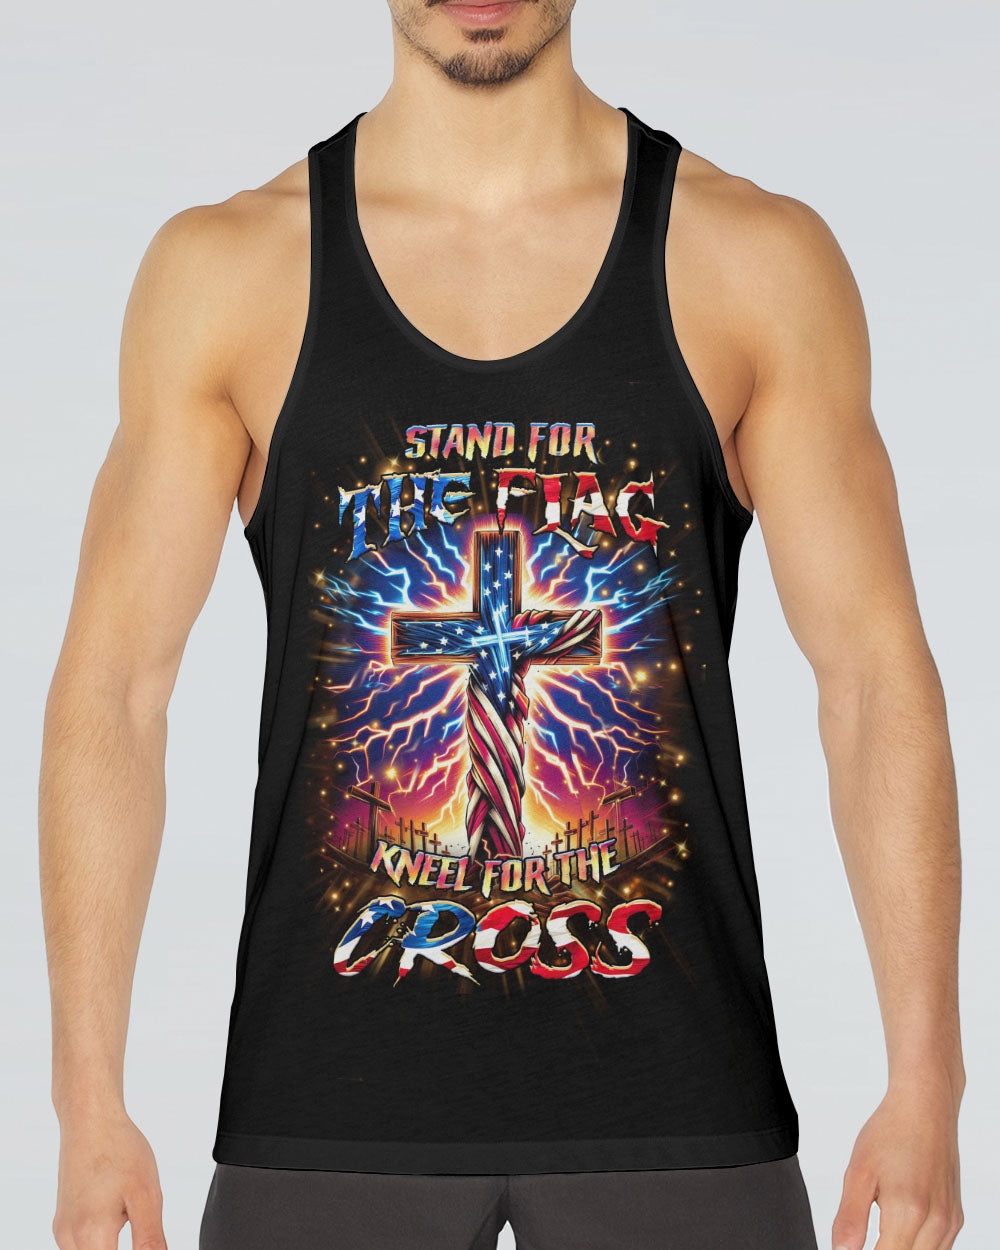 Stand For The Flag Kneel For The Cross Men's All Over Print Shirt - Yhhn1204241